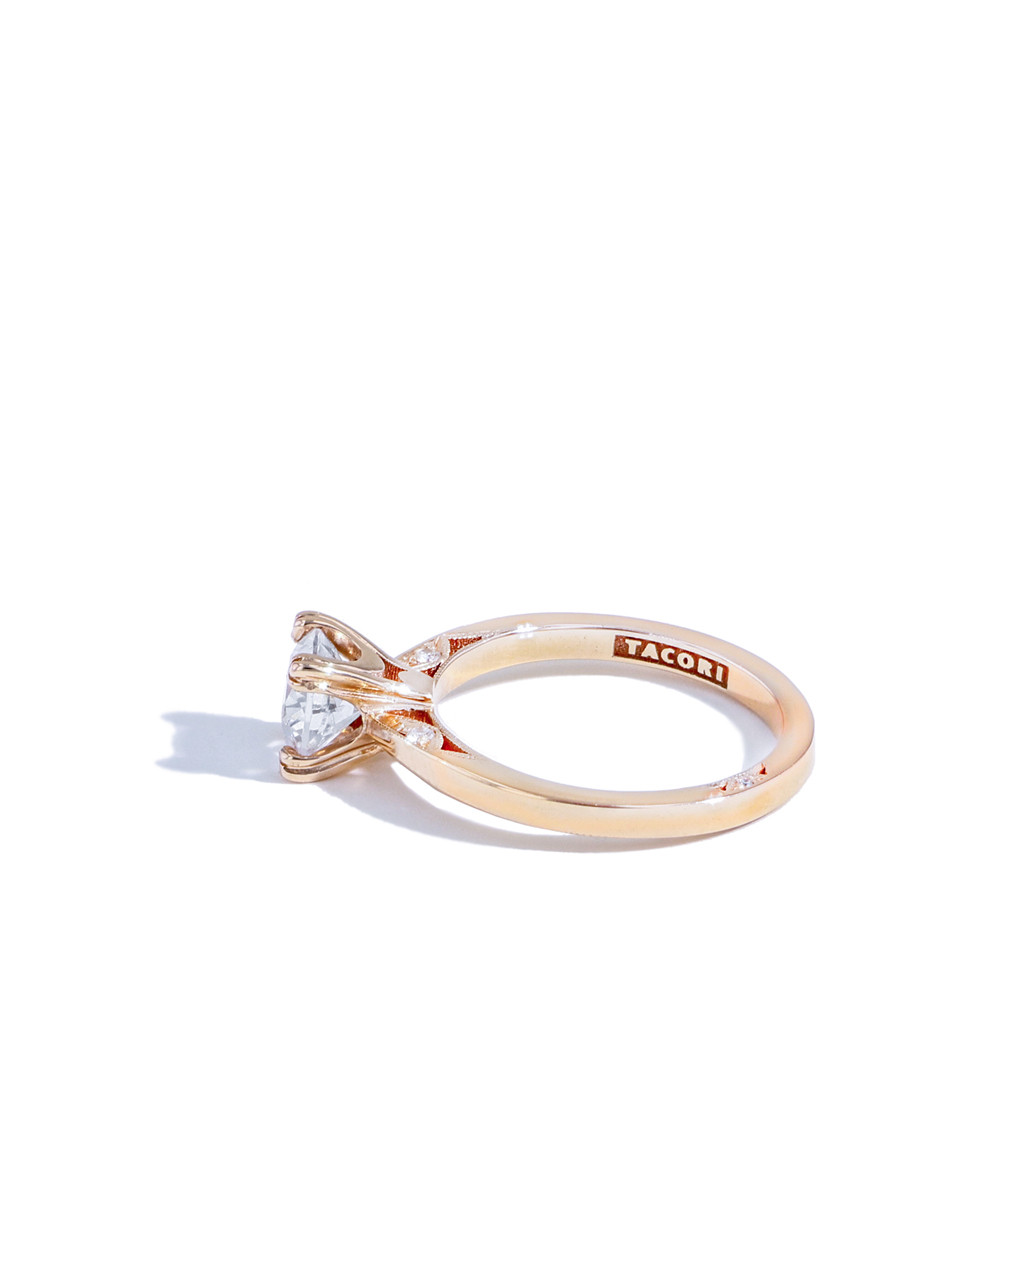 Red Garnet Engagement Ring, Wedding Ring 14K Black Gold Unique Vintage  Style 1.58 Carat Certified Pave Halo Handmade